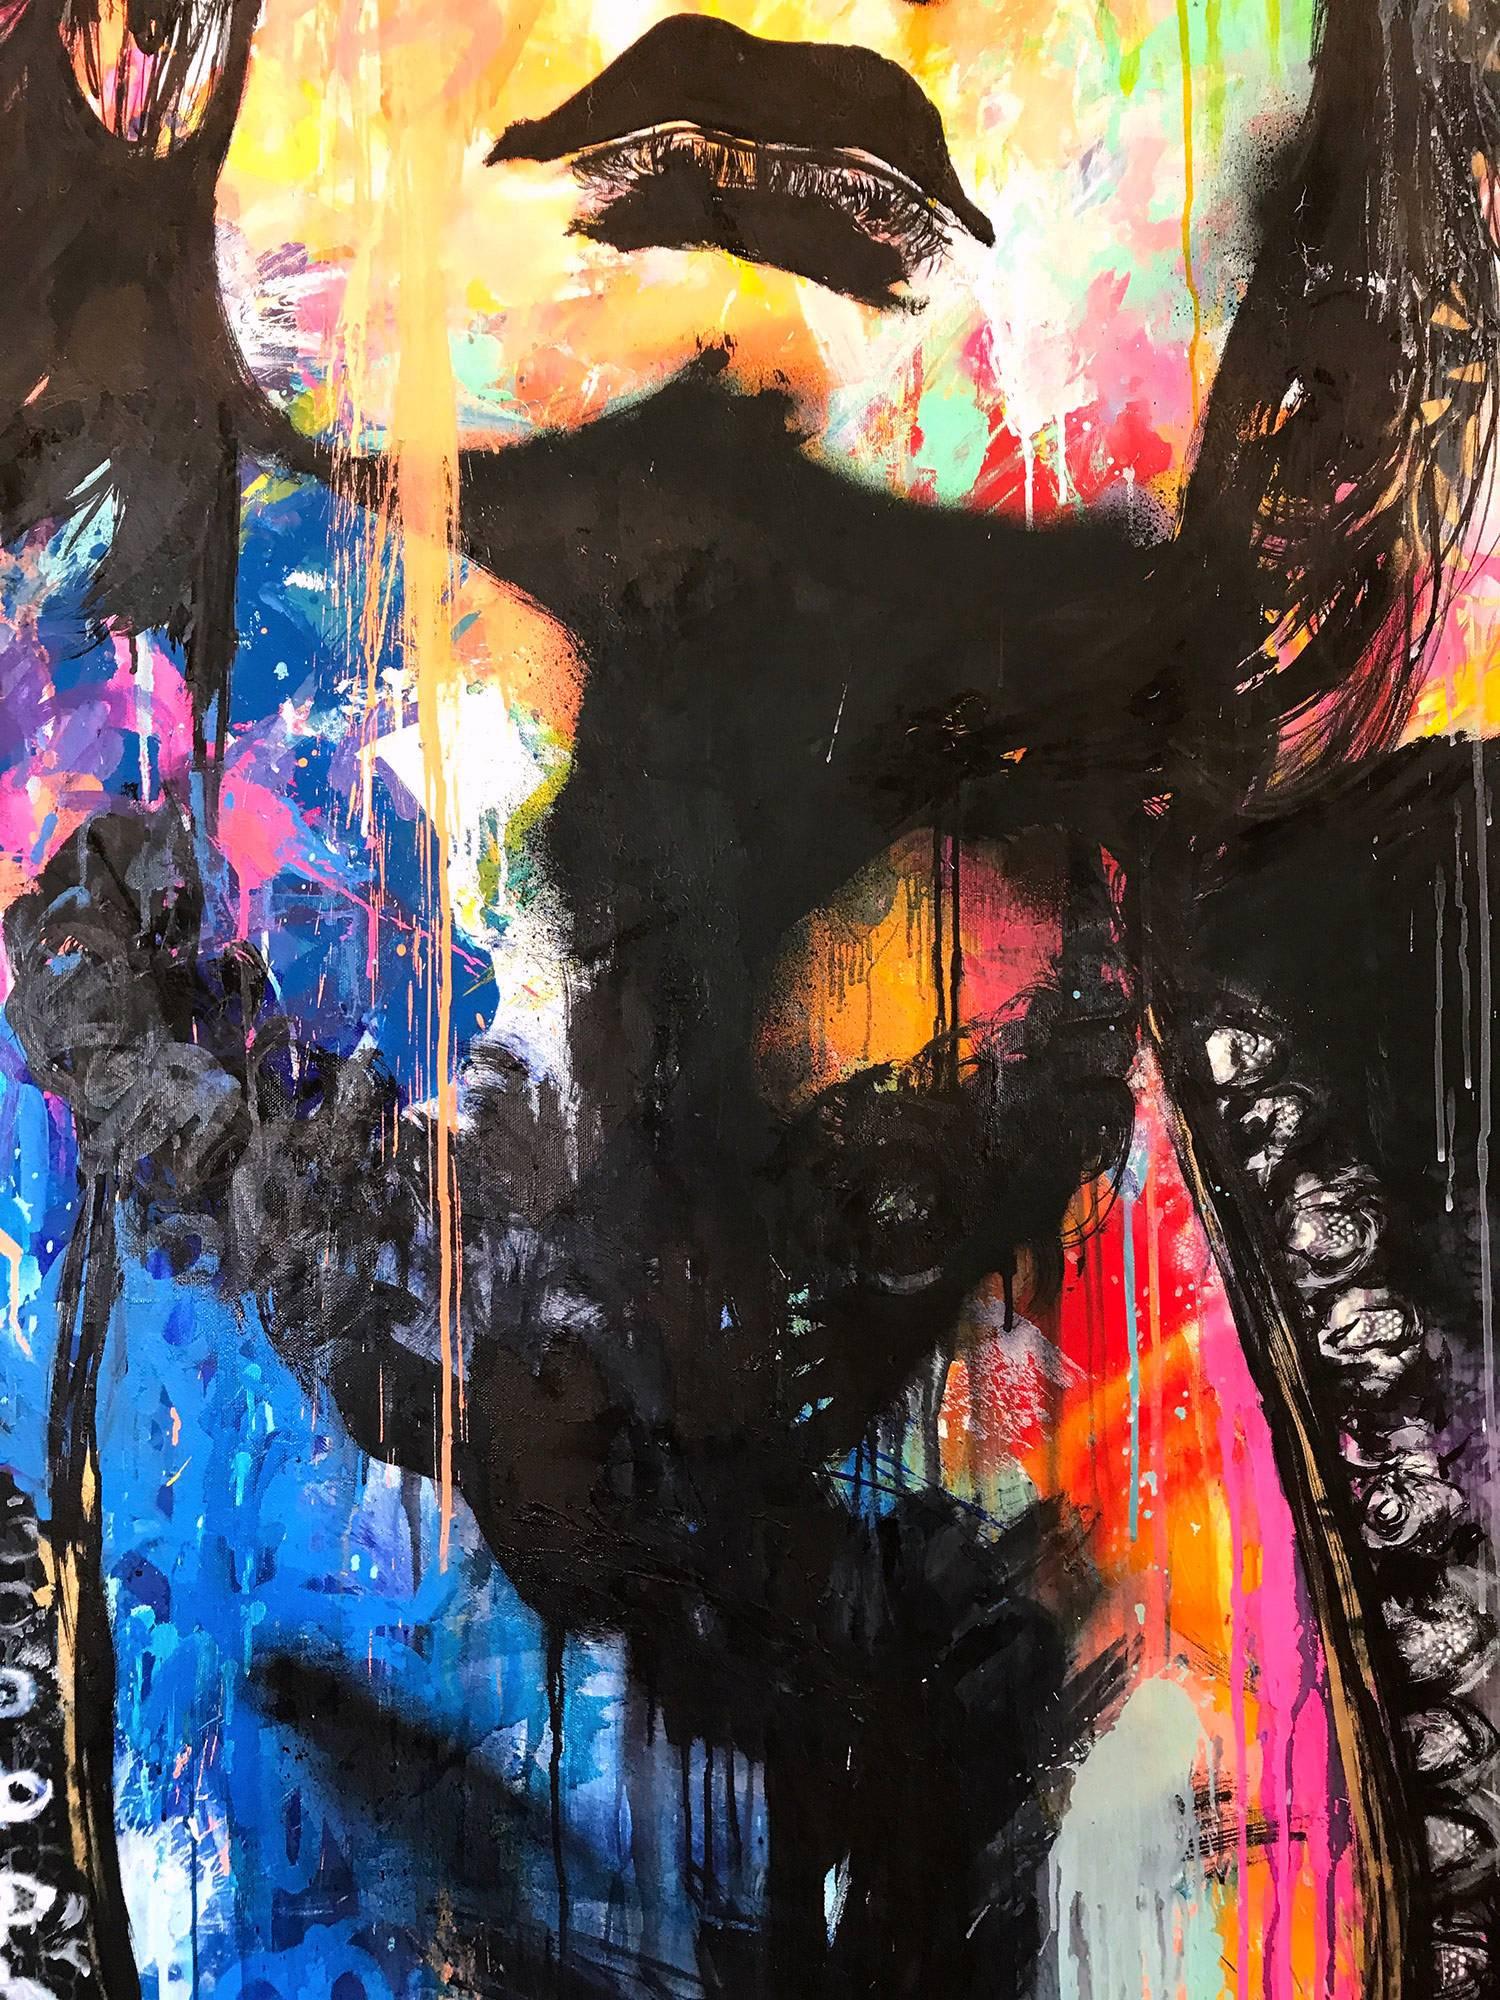 Dans l Ombre d un Doute“ „In the Shadow of a Doubt“, farbenfrohe, Straßenkunst (Streetart), Painting, von J.M. Robert